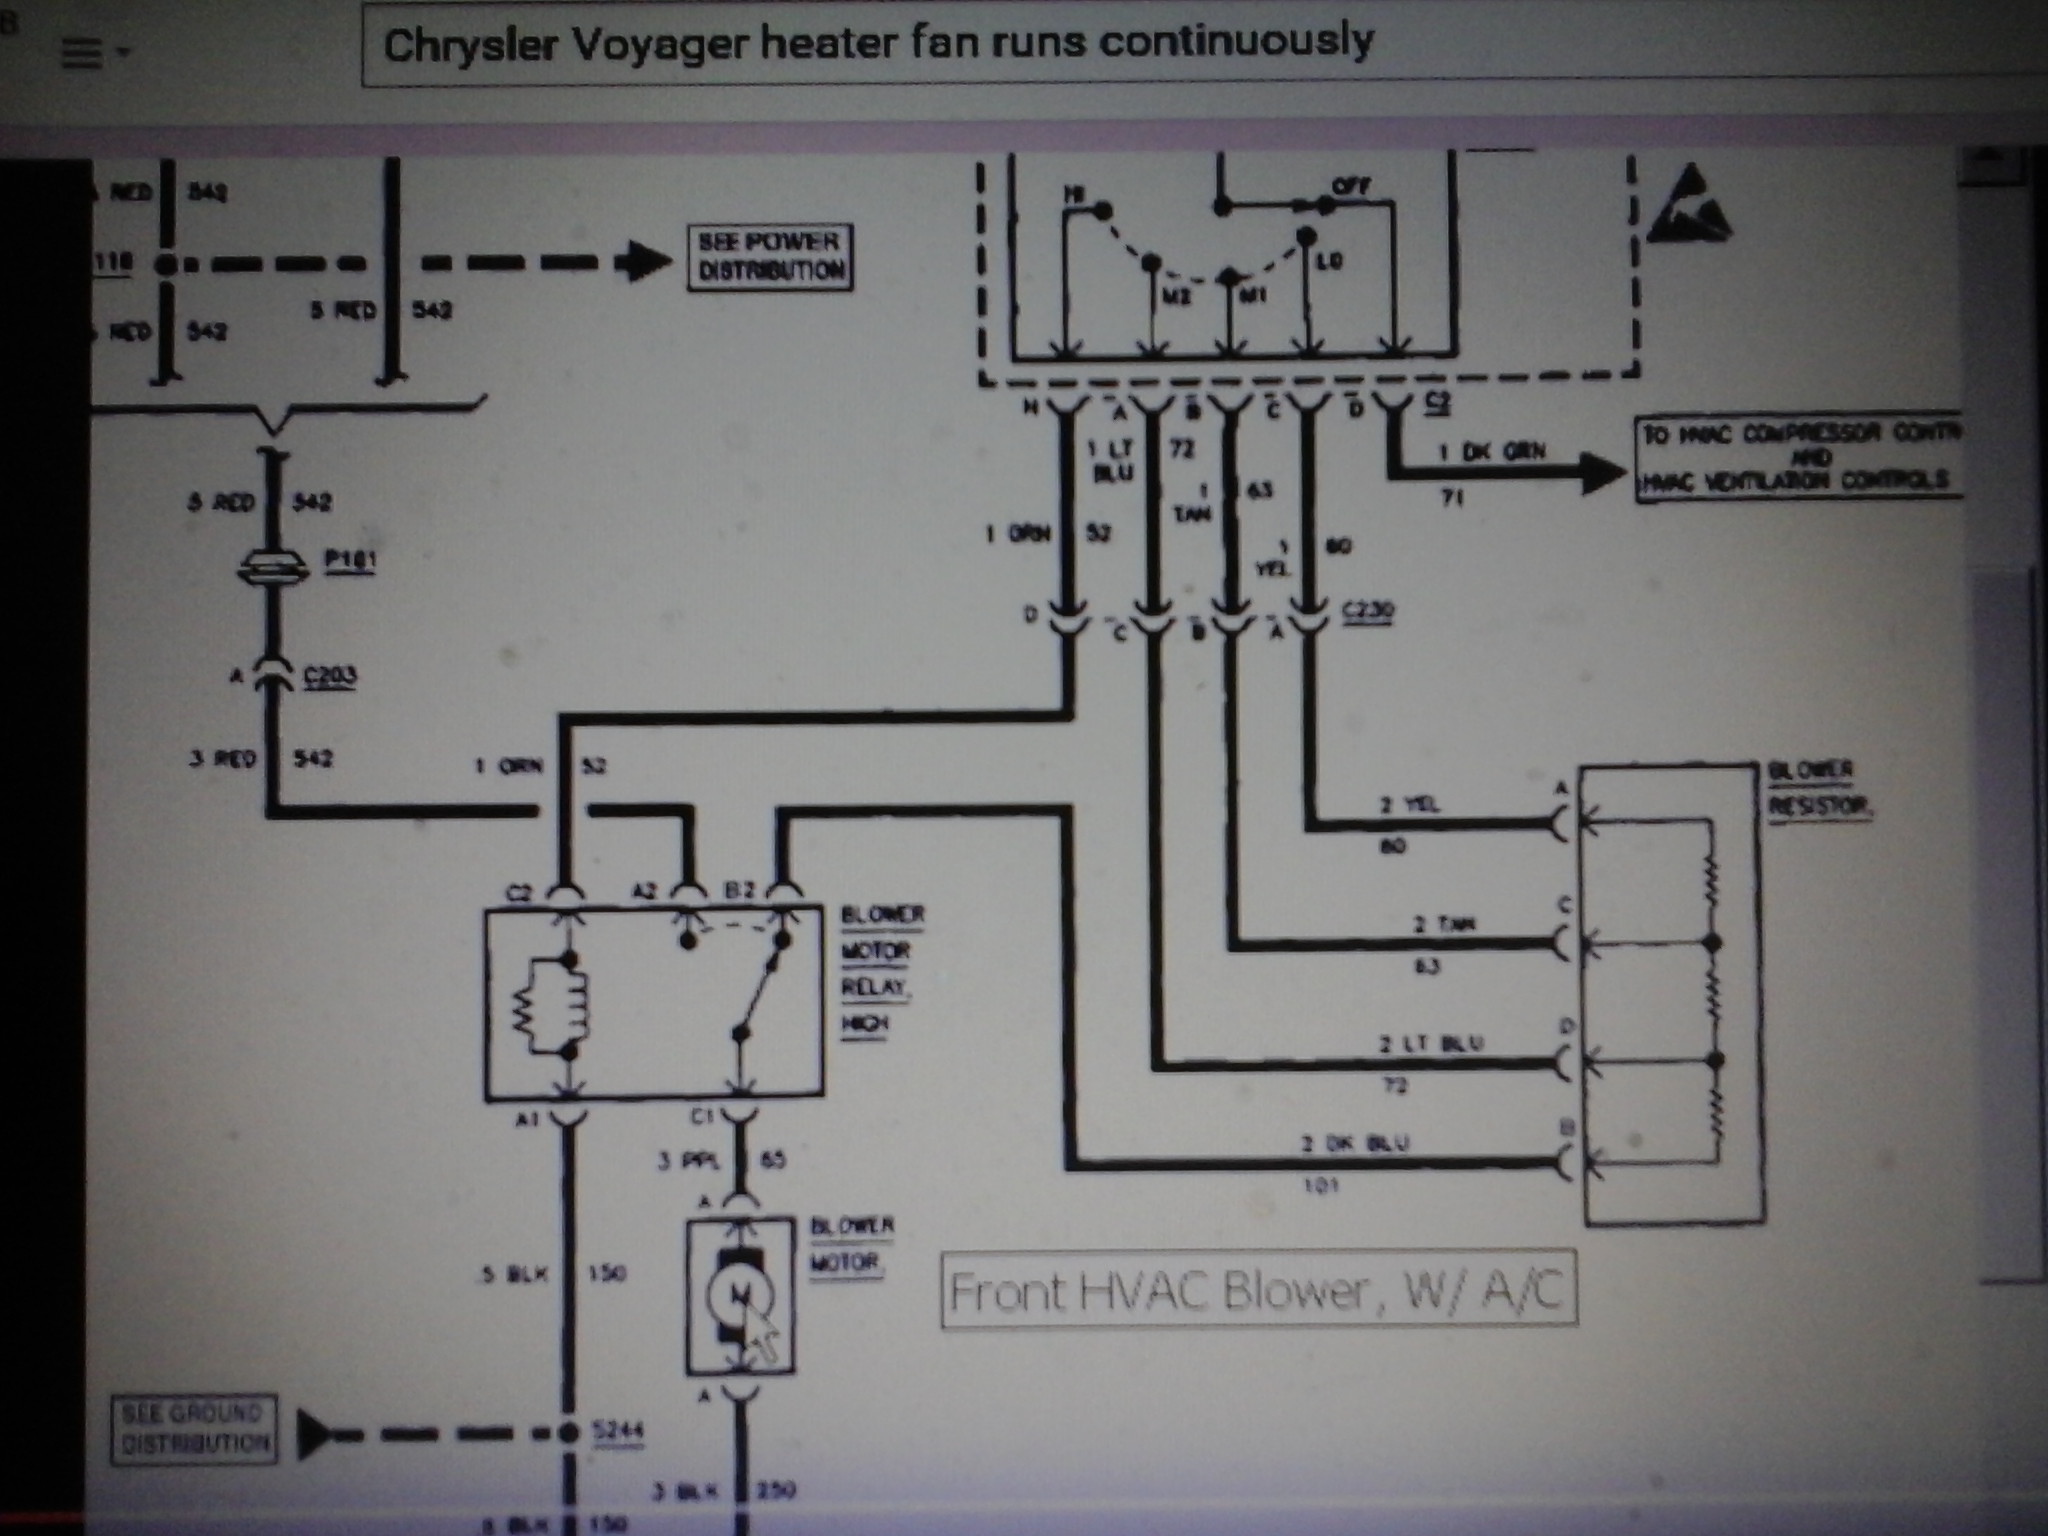 2003 Chrysler Voyger Lx Power Window Wiring Diagram Fan Motor Blowing Continouously. – Chrysler forum – Chrysler … Of 2003 Chrysler Voyger Lx Power Window Wiring Diagram